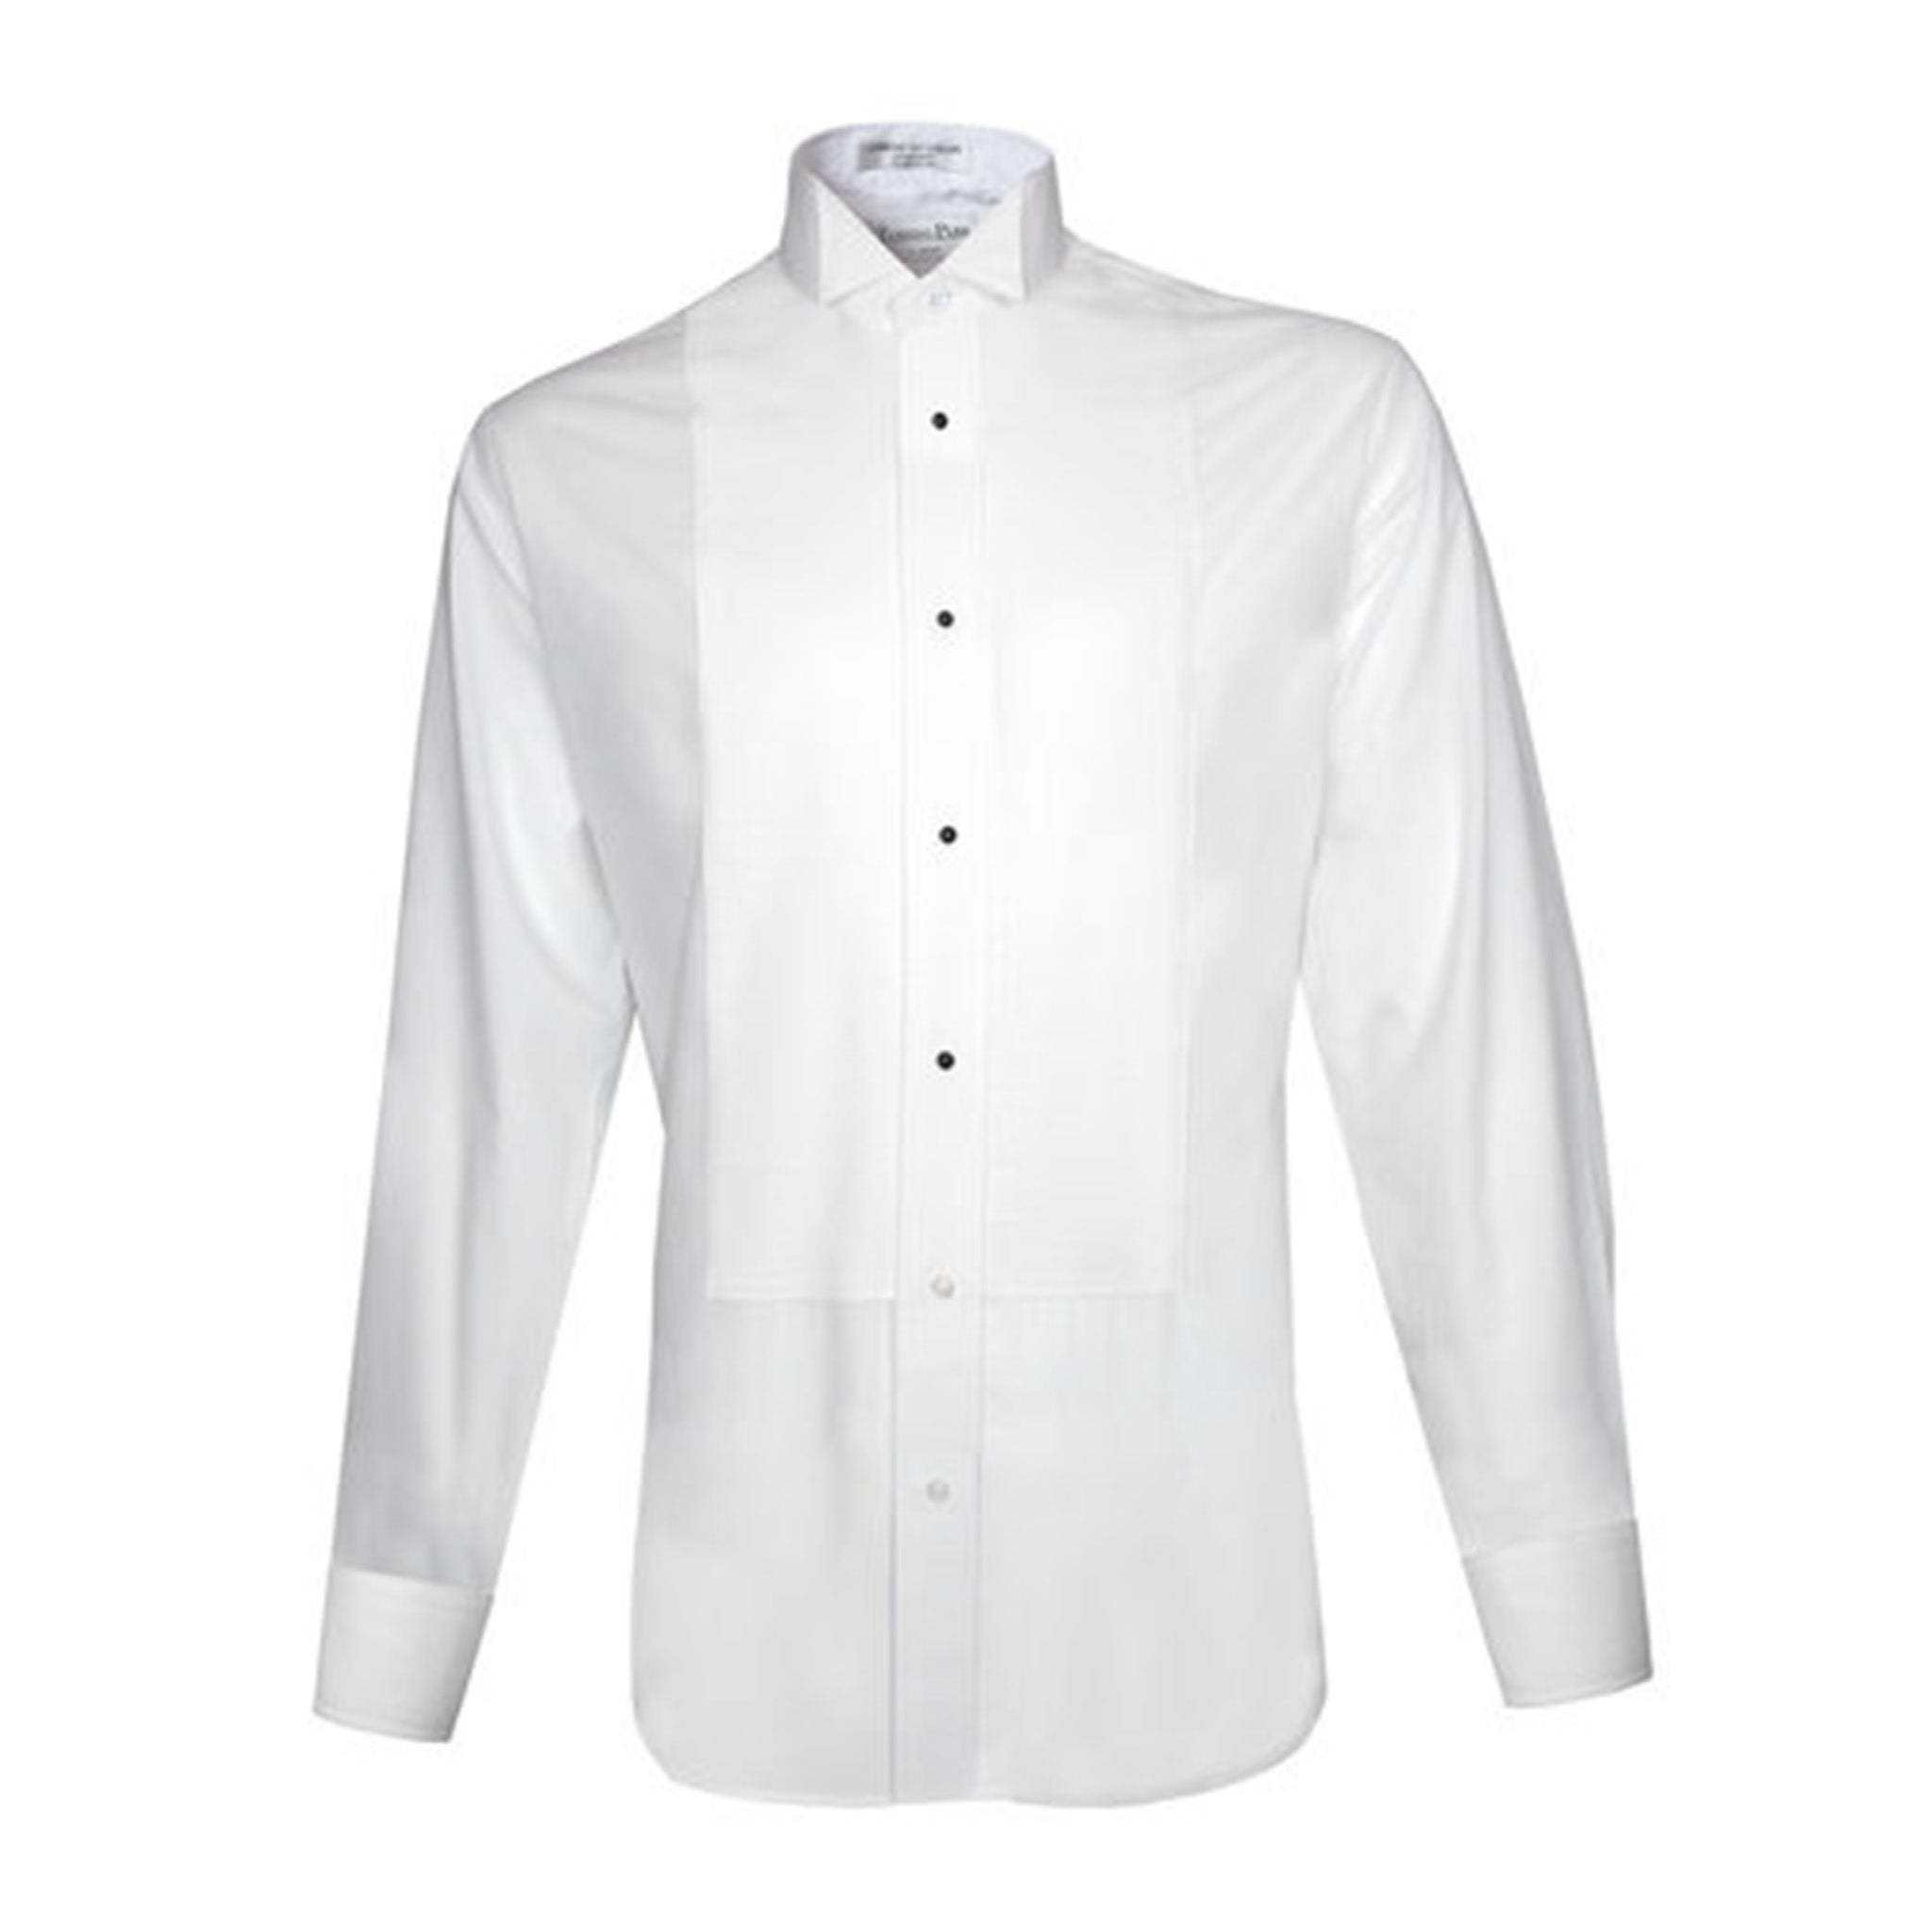 White Pique Formal Shirt